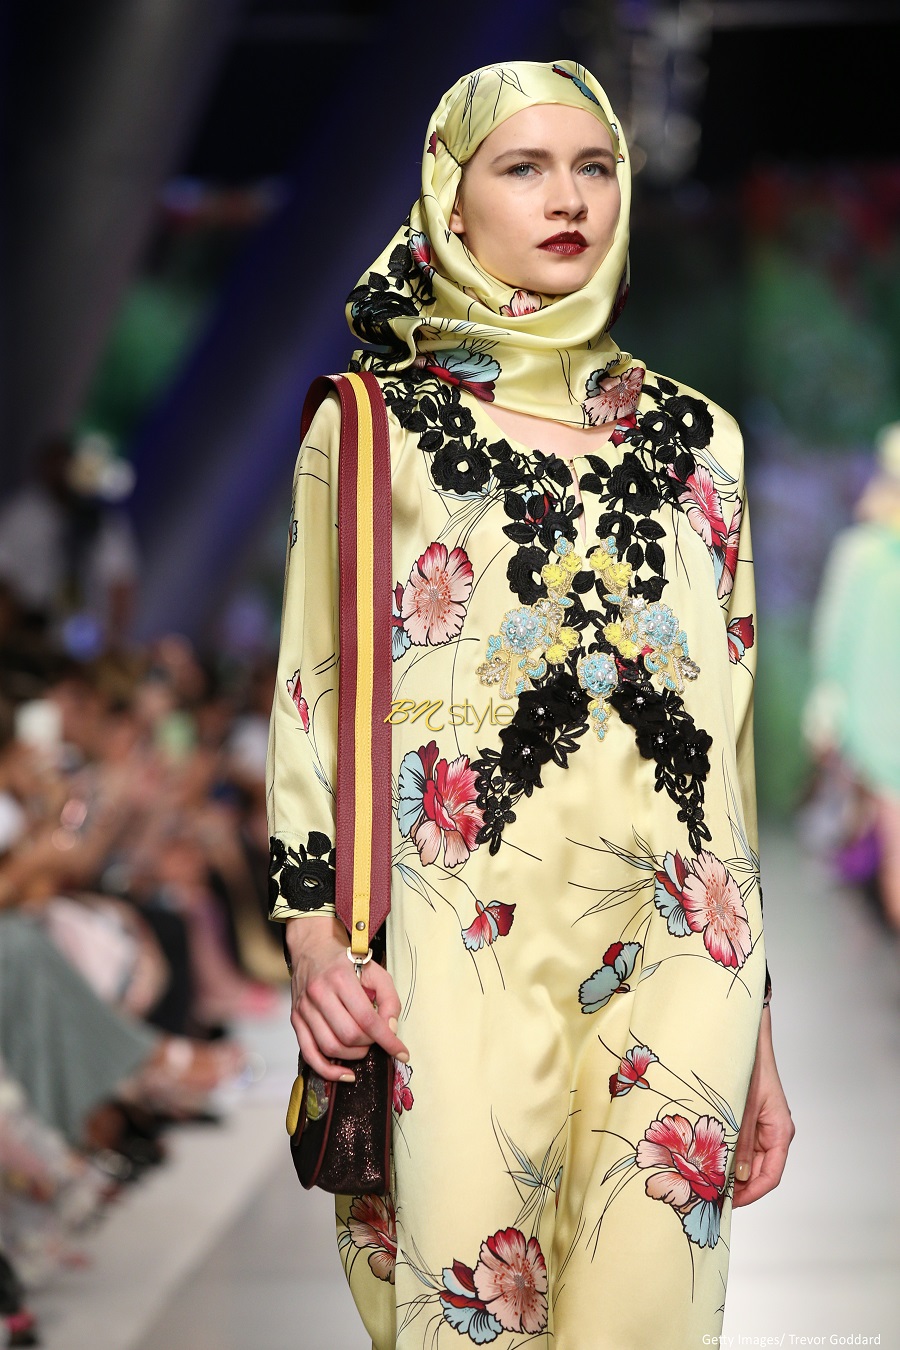 Saudi Arabia holds first ever Arab Fashion Week with no photographers